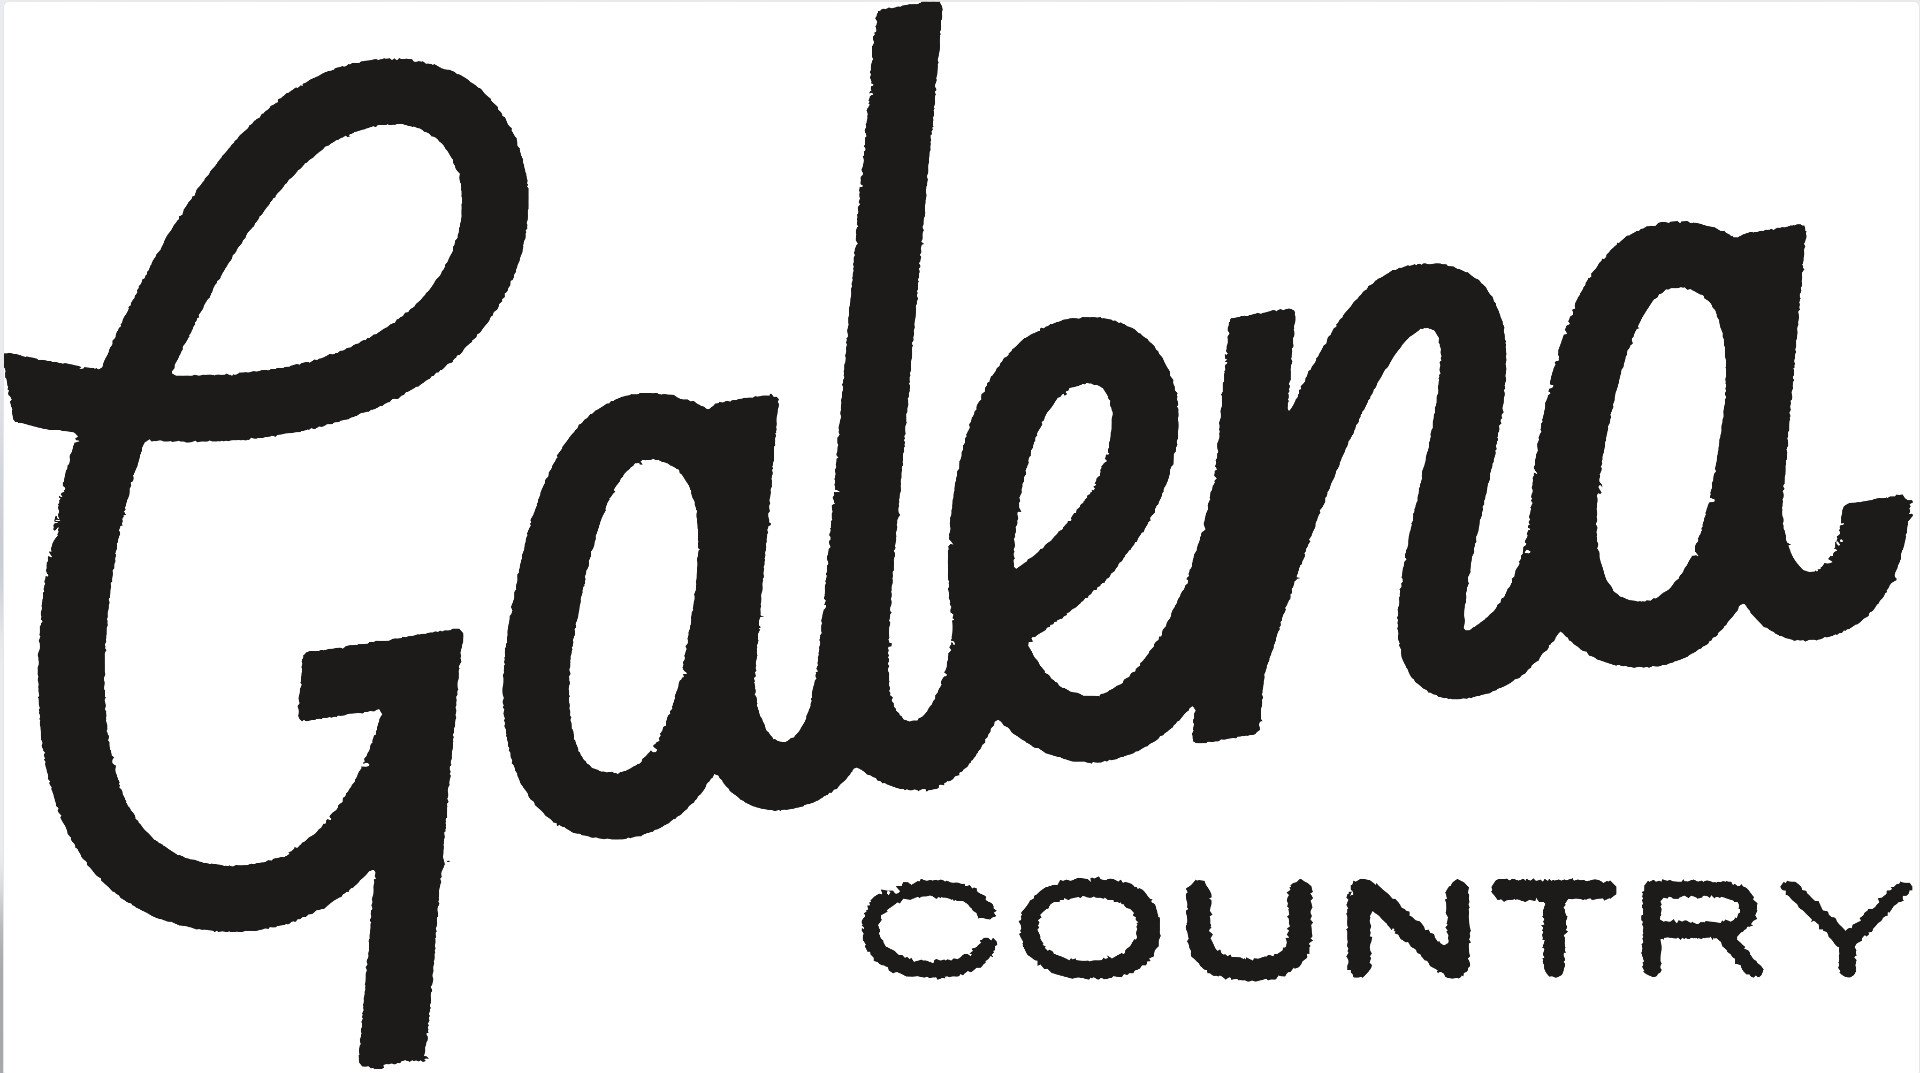 Galena_Country_Words_Logo.jpg